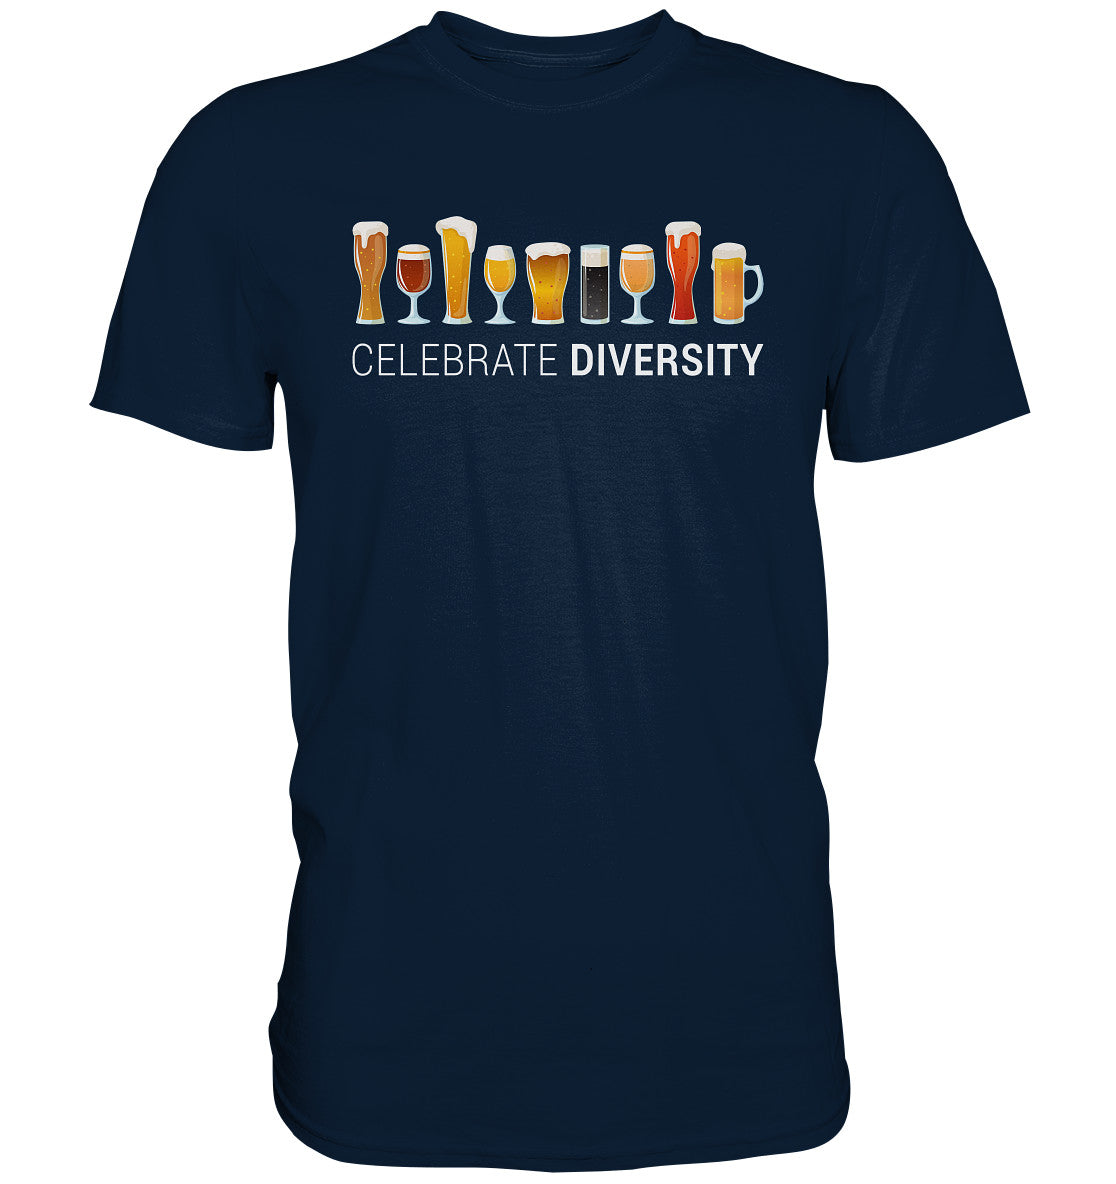 Celebrate Diversity - Premium Shirt